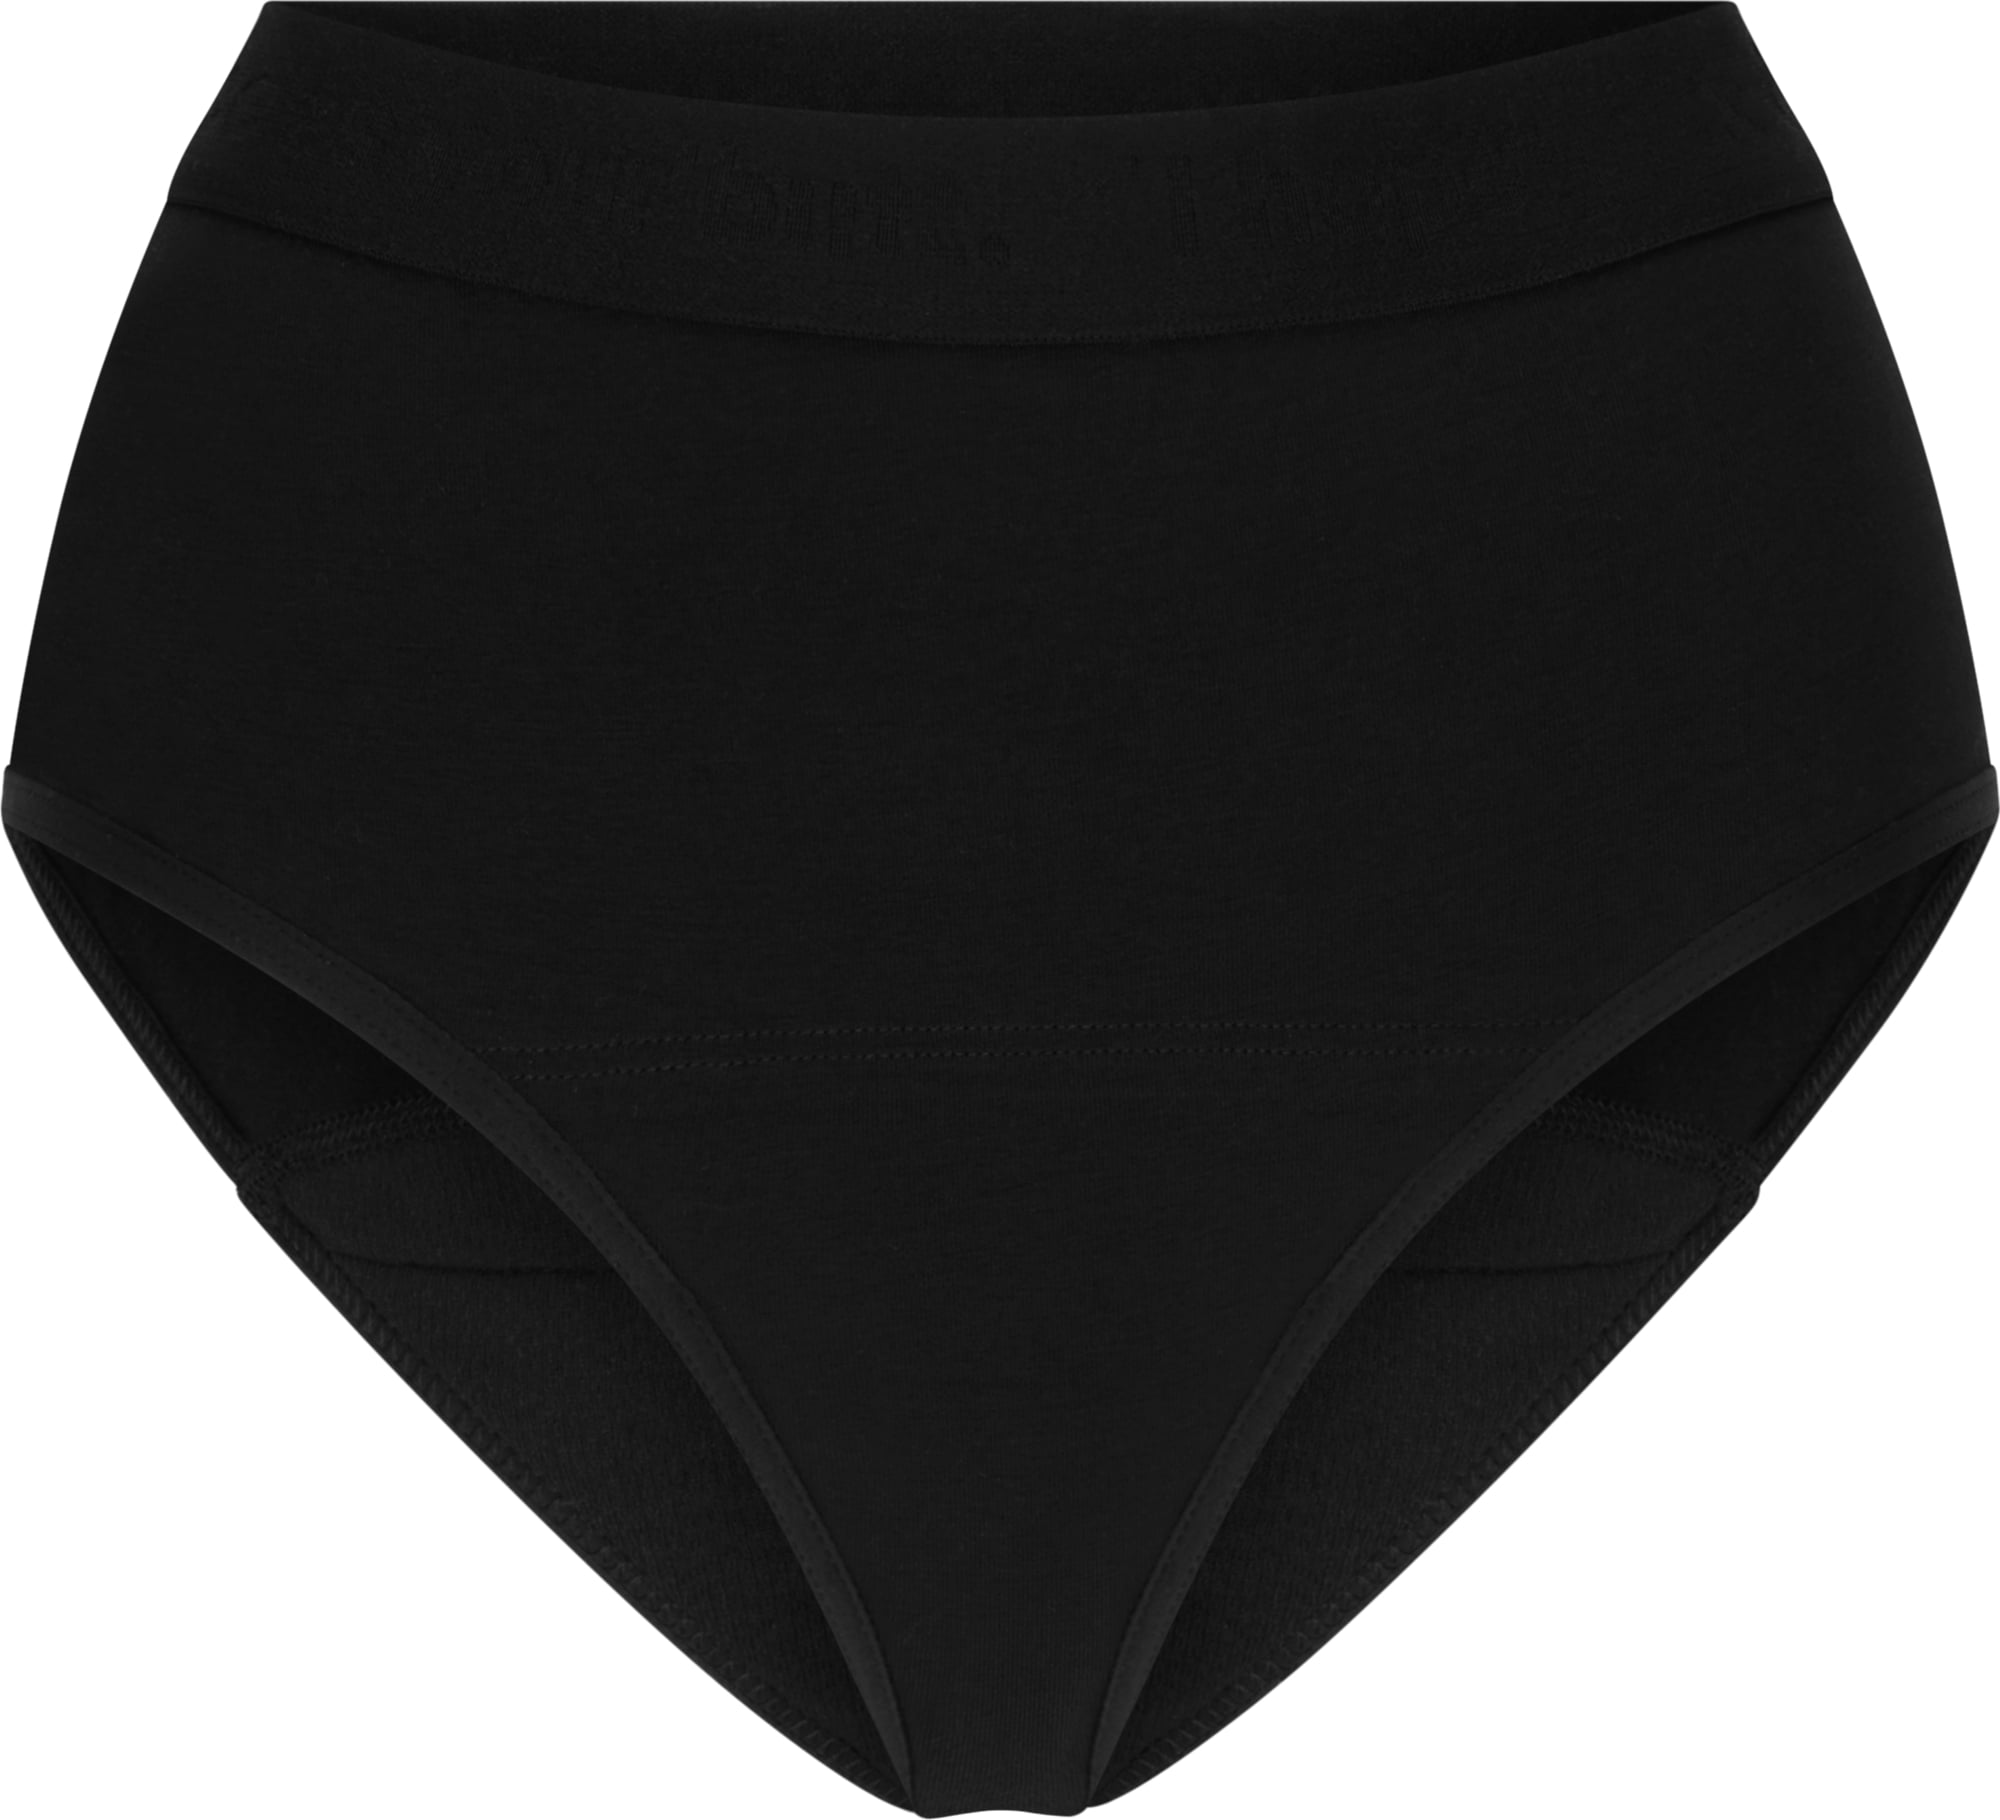 Qnix High Cut Period Underwear Women Hipster Black Panty - Buy